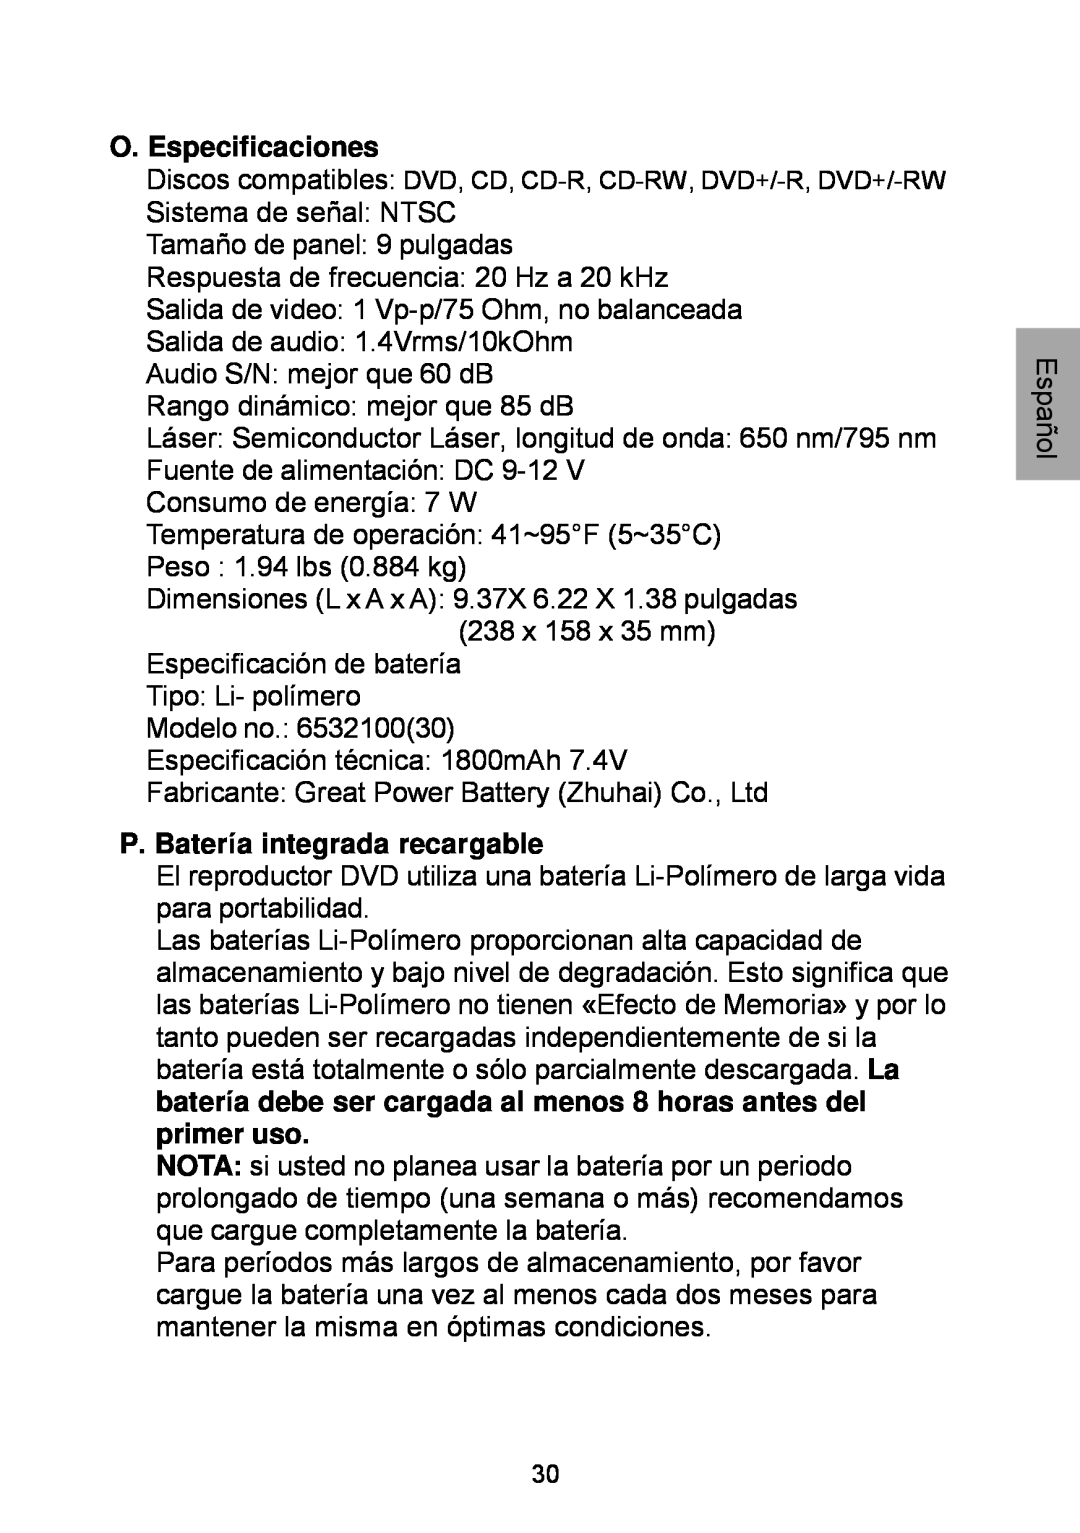 Audiovox D1929B manual O. Especificaciones, P. Batería integrada recargable 